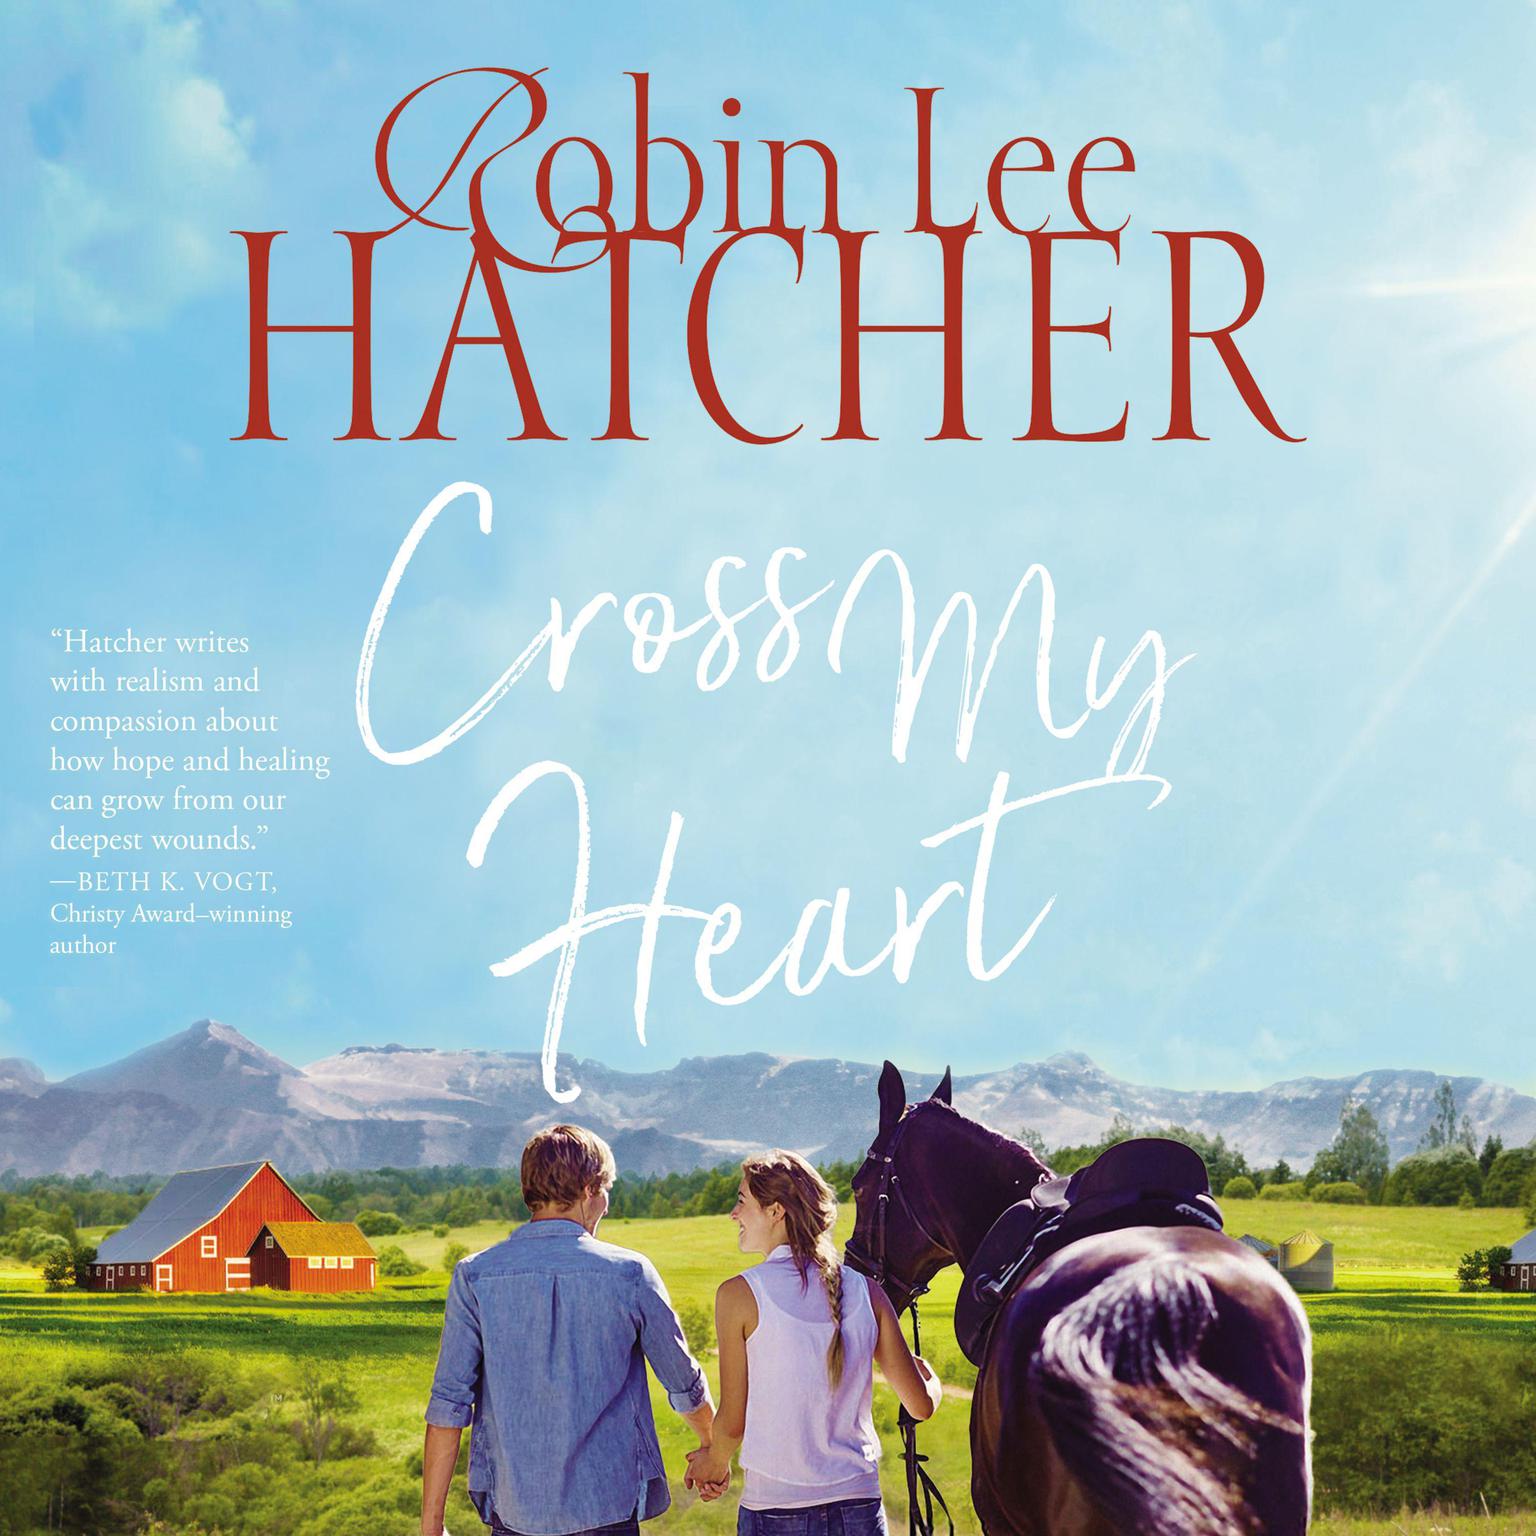 Cross My Heart Audiobook, by Robin Lee Hatcher